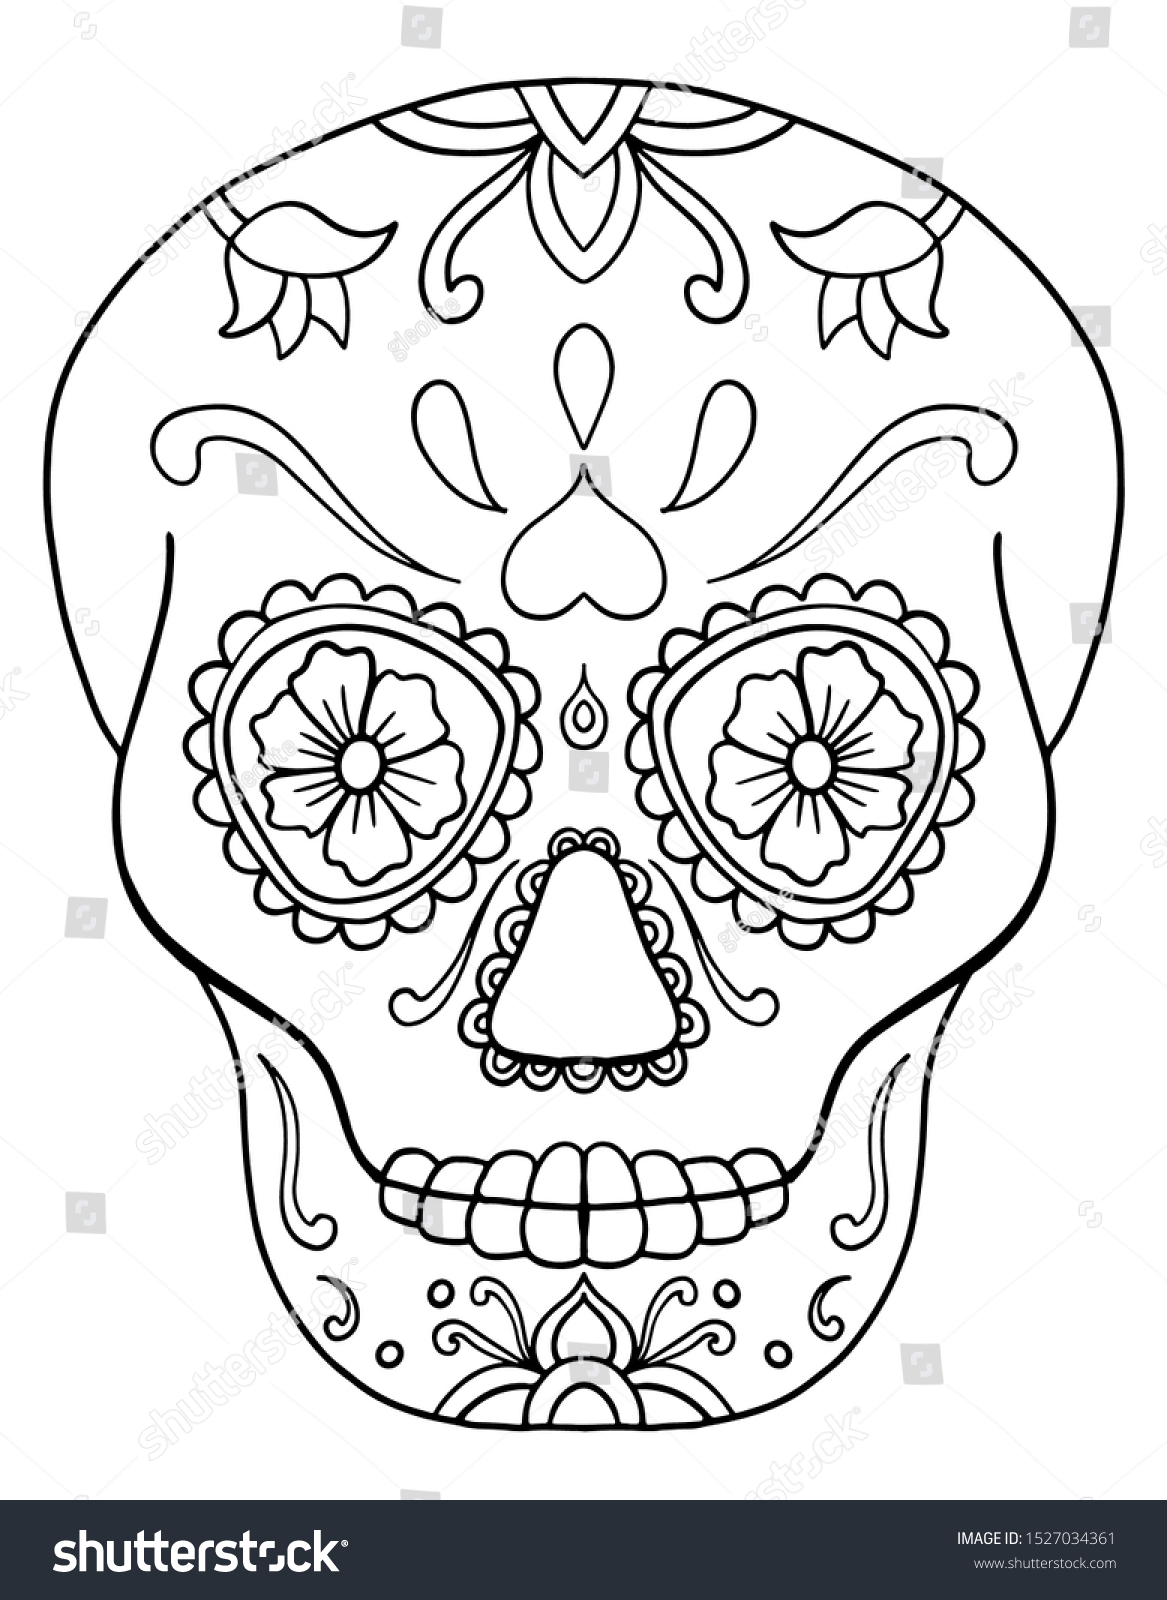 Simple coloring page mexican sugar skull stock vector royalty free